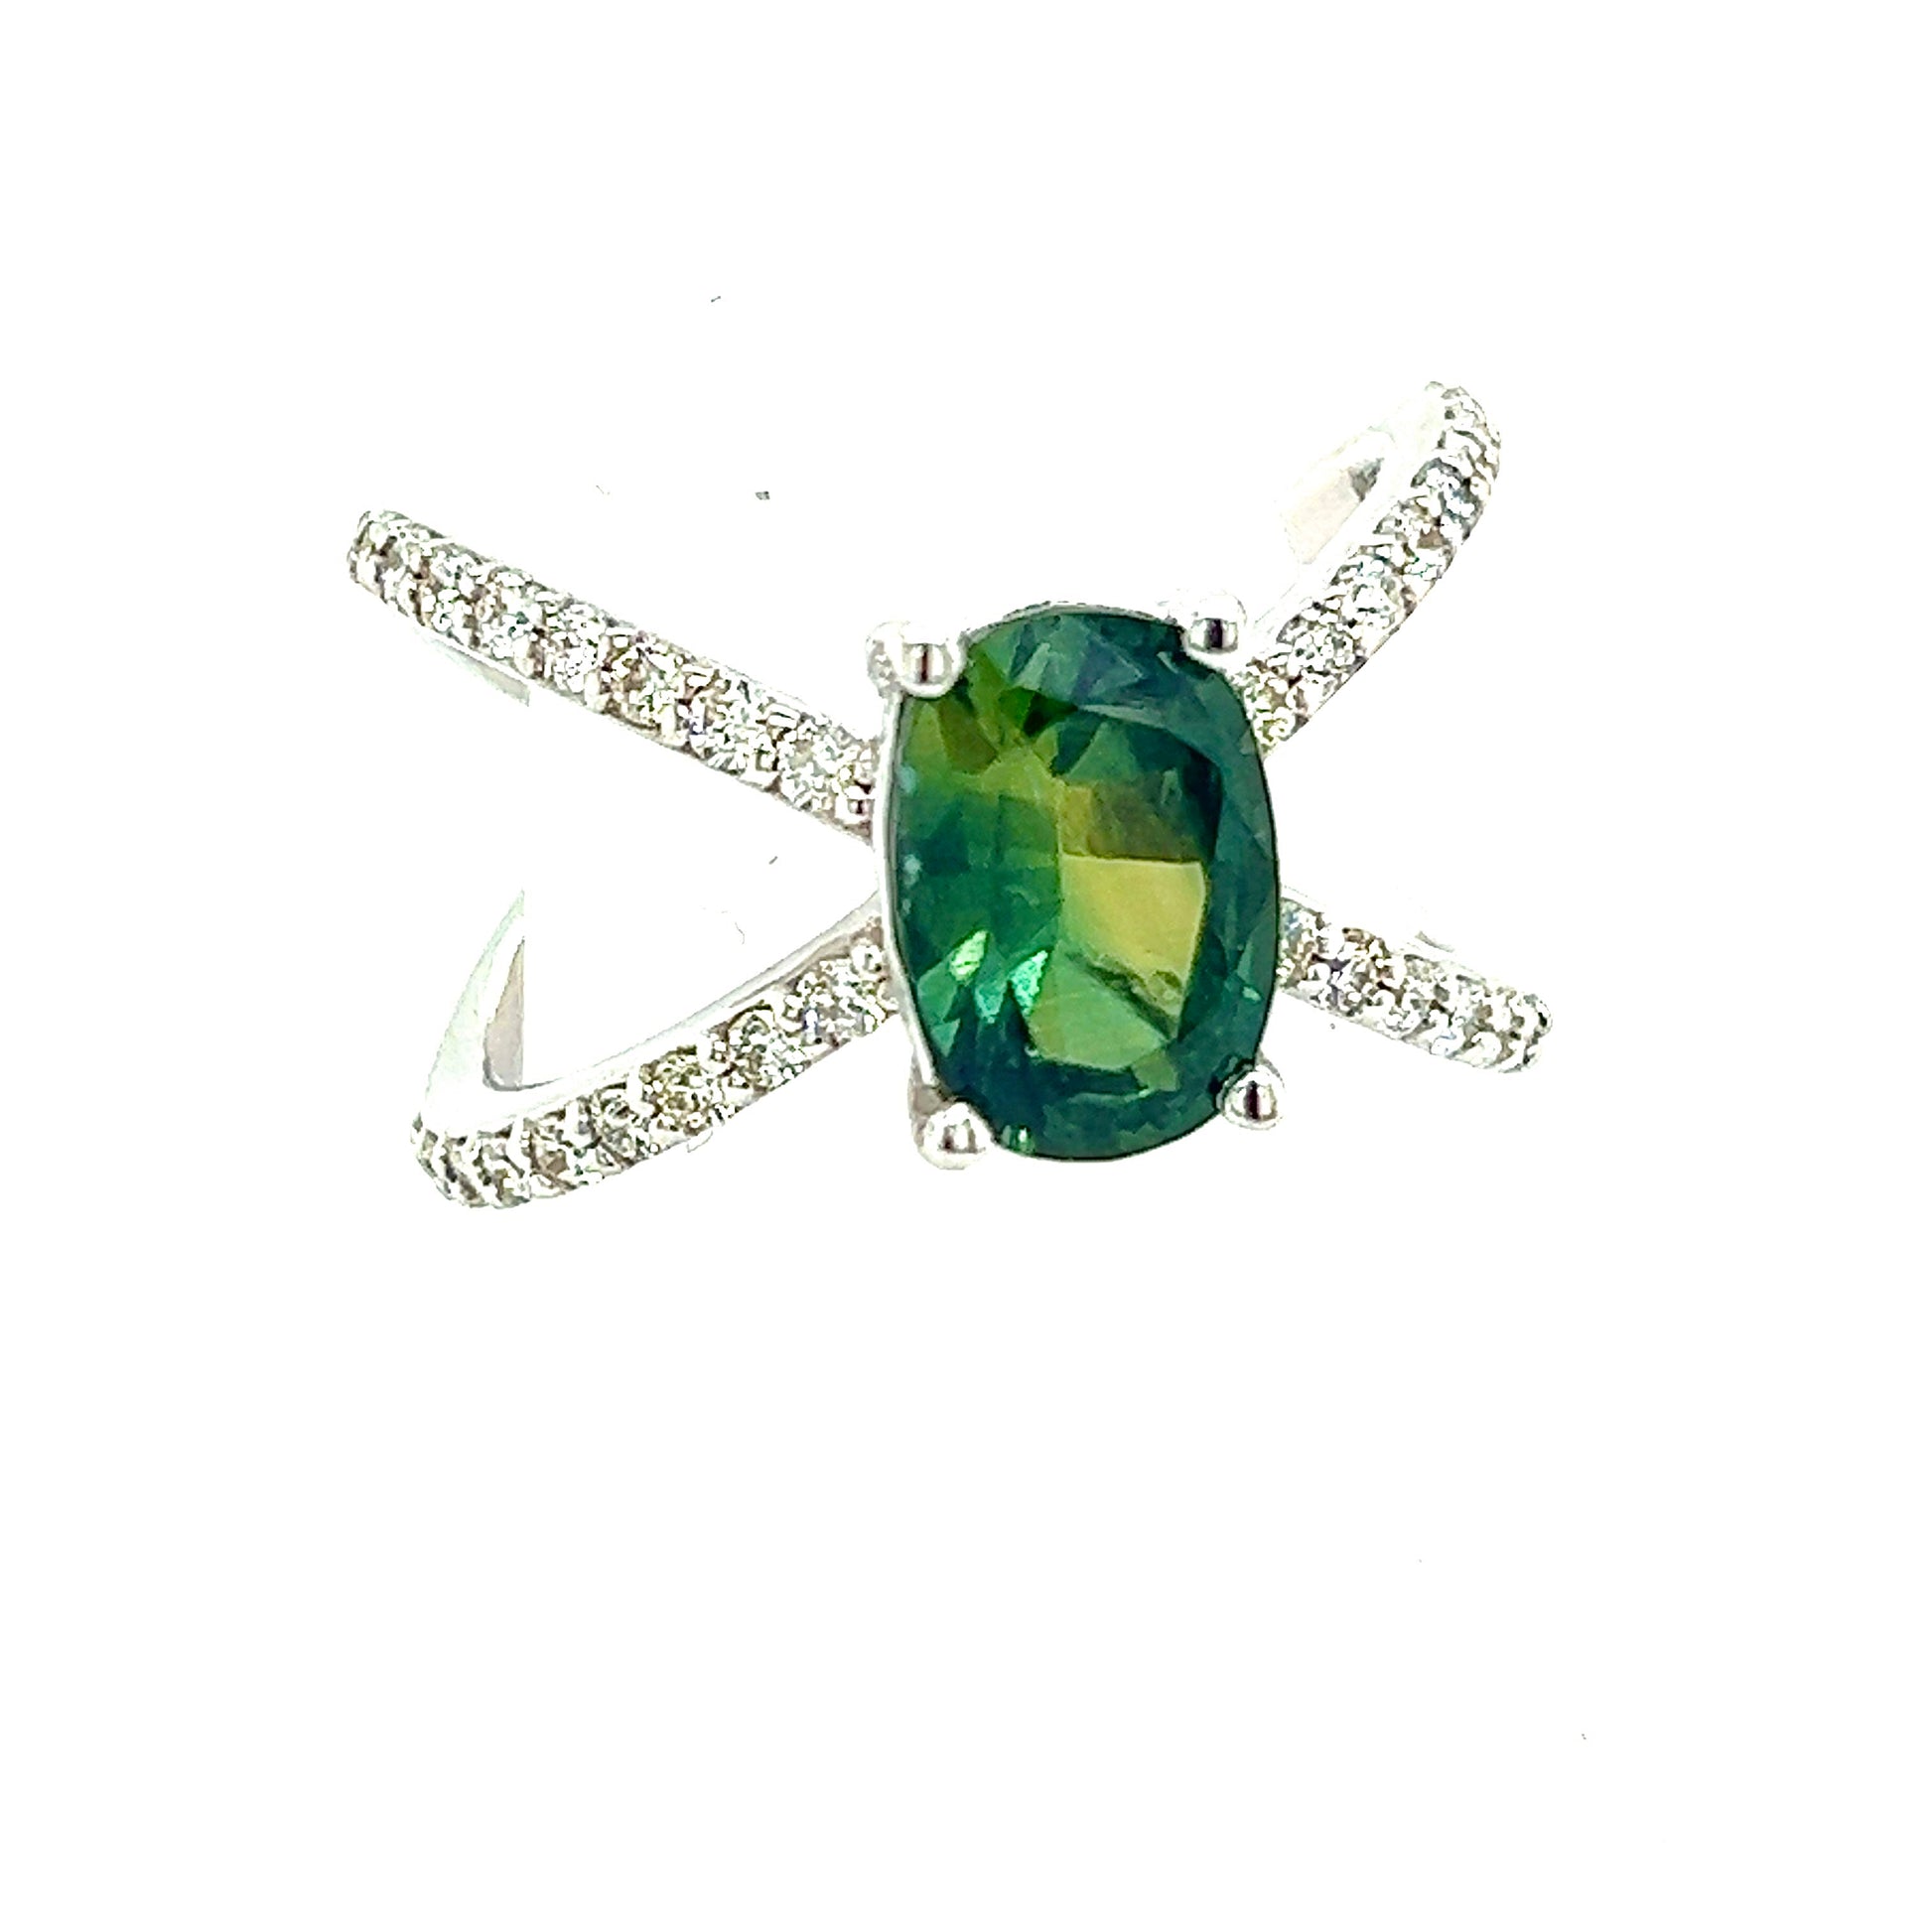 Natural Tourmaline Diamond Ring Size 6.5 14k W Gold 1.78 TCW Certificate $4,950 217109 - Certified Fine Jewelry